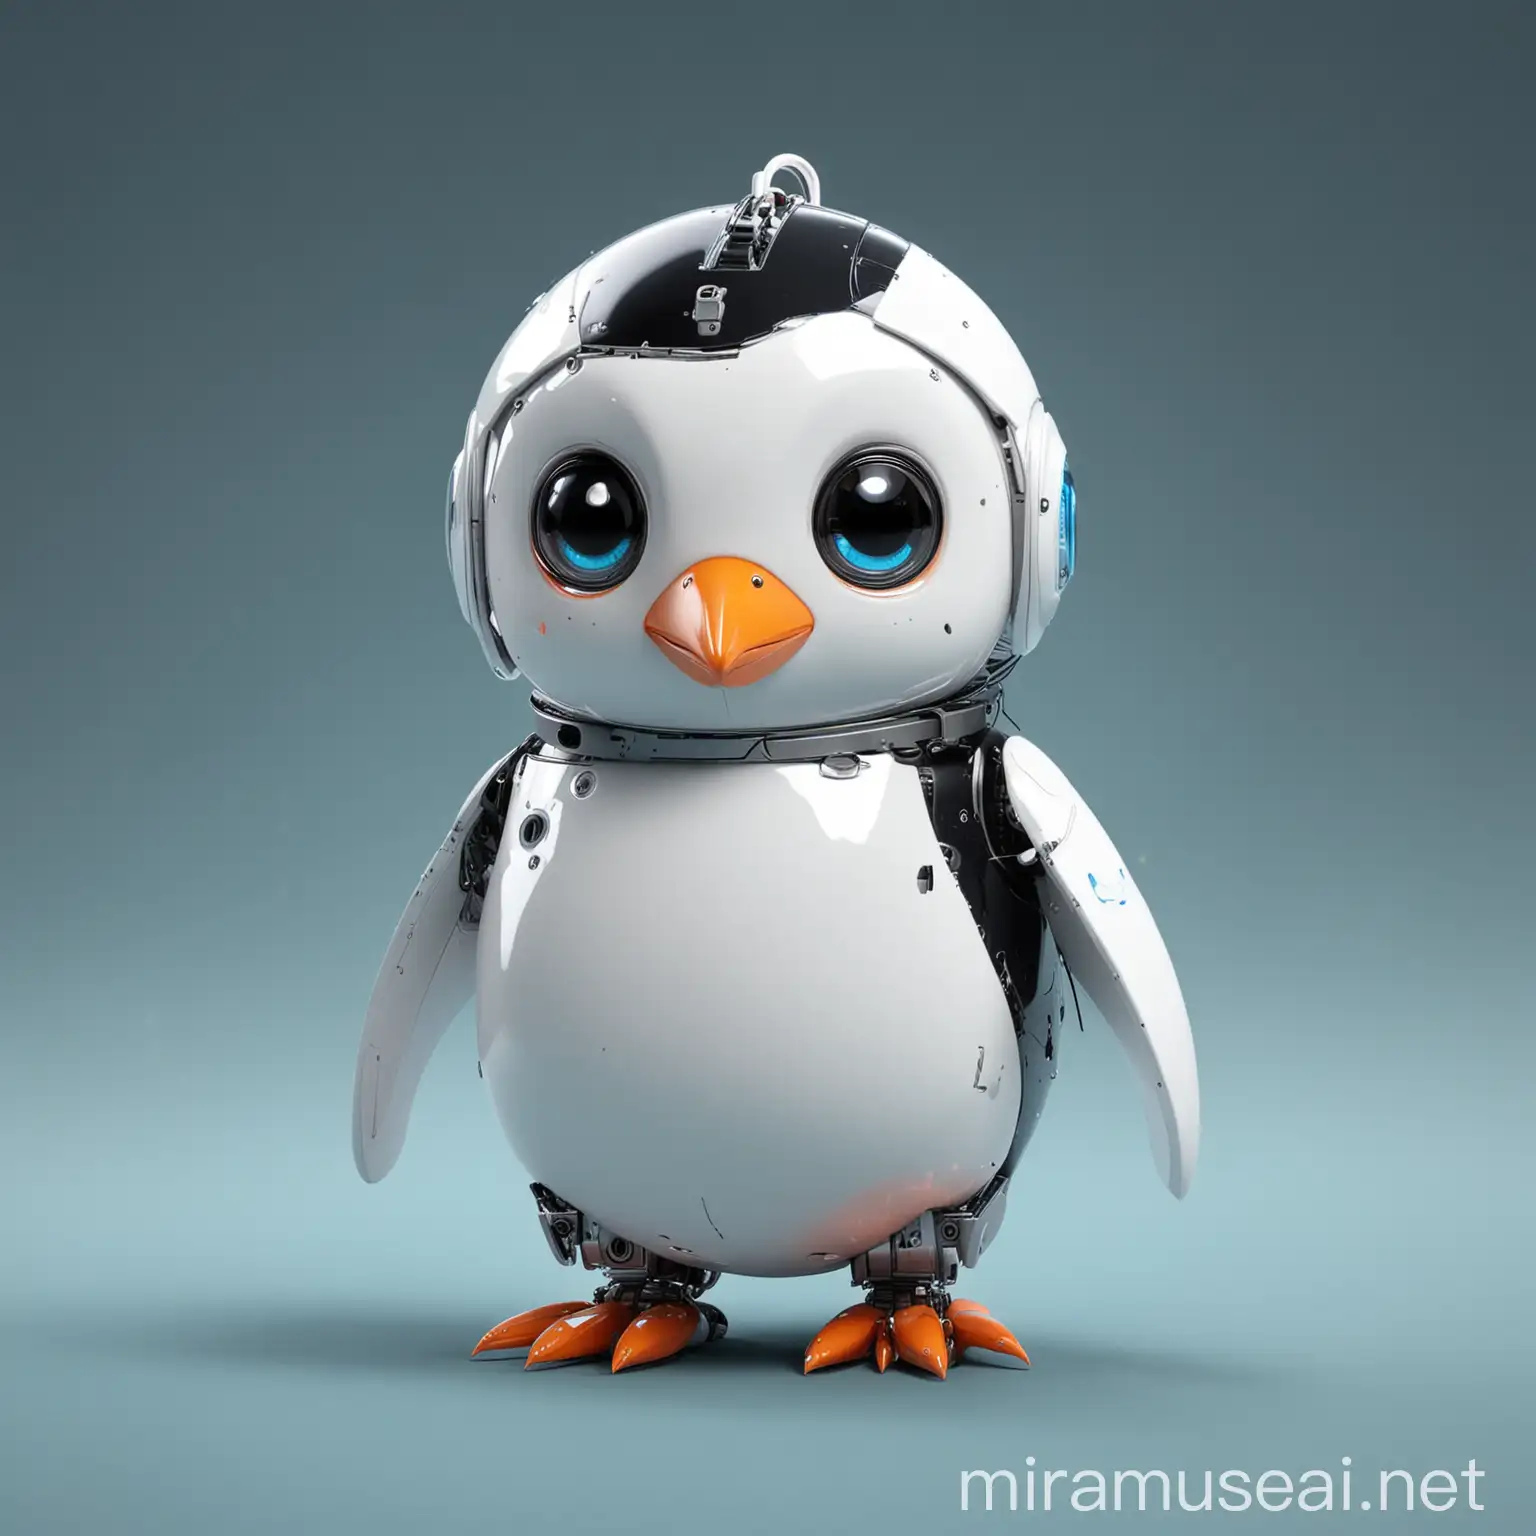 Adorable Robotic Penguin Playful and Endearing Mechanical Bird